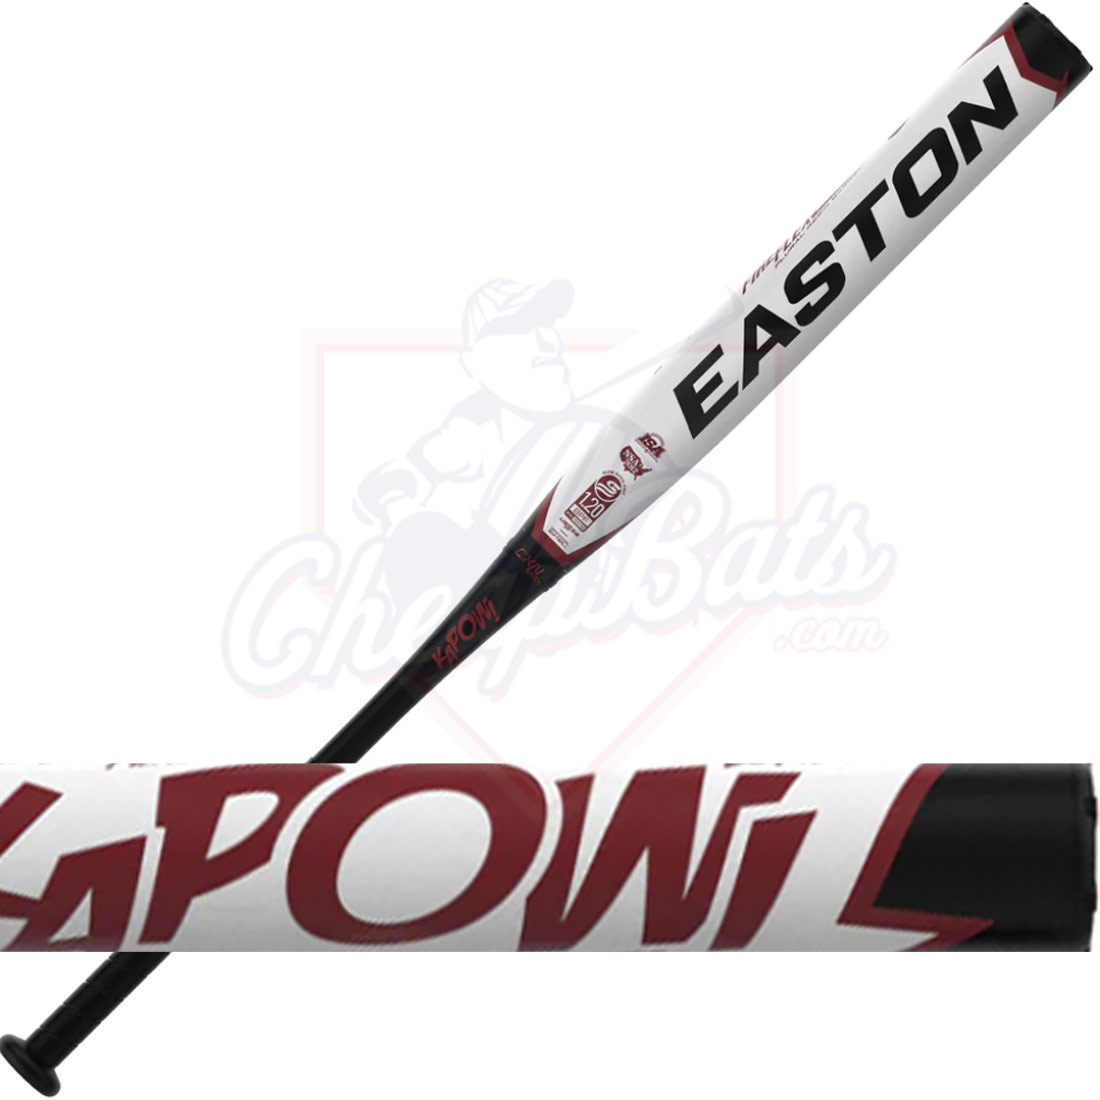 2023 Easton Comic Kapow Slowpitch Softball Bat Loaded USSSA SP23KPWL